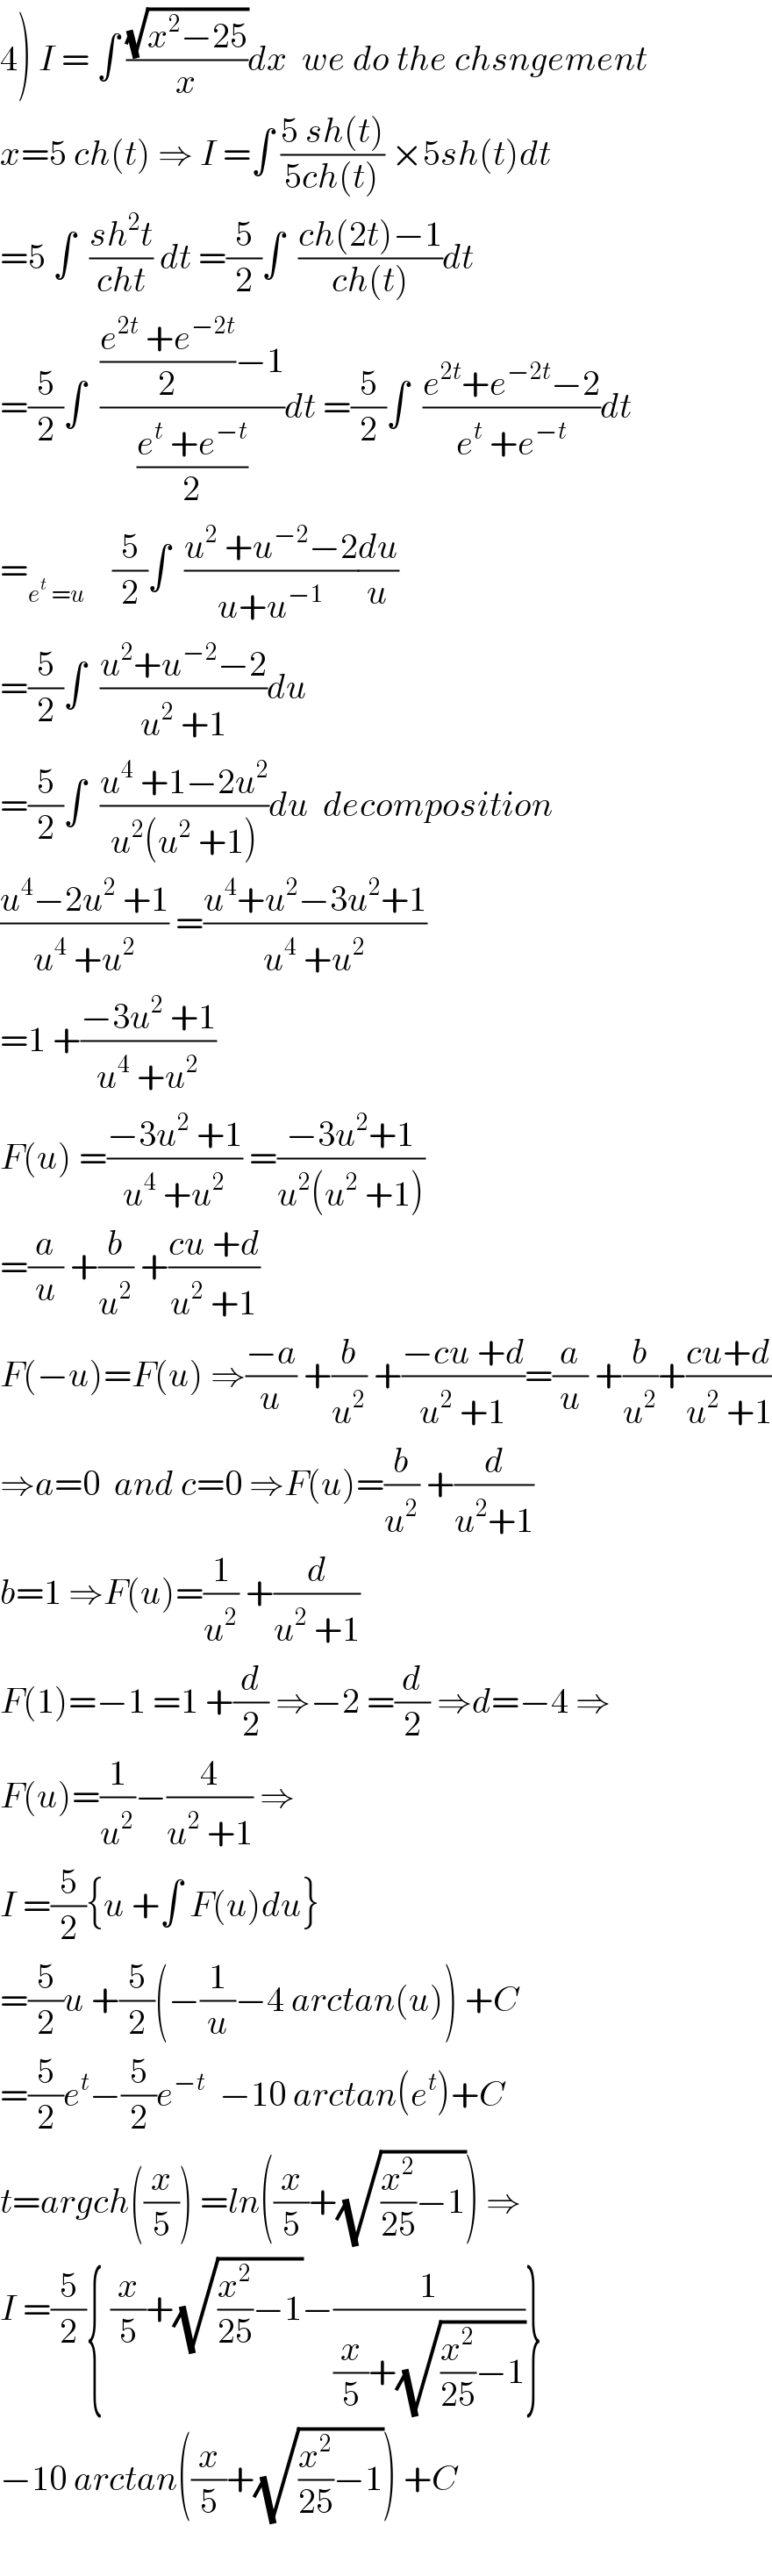 4) I = ∫ ((√(x^2 −25))/x)dx  we do the chsngement  x=5 ch(t) ⇒ I =∫ ((5 sh(t))/(5ch(t))) ×5sh(t)dt  =5 ∫  ((sh^2 t)/(cht)) dt =(5/2)∫  ((ch(2t)−1)/(ch(t)))dt  =(5/2)∫  ((((e^(2t)  +e^(−2t) )/2)−1)/((e^t  +e^(−t) )/2))dt =(5/2)∫  ((e^(2t) +e^(−2t) −2)/(e^t  +e^(−t) ))dt  =_(e^t  =u)     (5/2)∫  ((u^2  +u^(−2) −2)/(u+u^(−1) ))(du/u)  =(5/2)∫  ((u^2 +u^(−2) −2)/(u^2  +1))du  =(5/2)∫  ((u^4  +1−2u^2 )/(u^2 (u^2  +1)))du  decomposition  ((u^4 −2u^2  +1)/(u^4  +u^2 )) =((u^4 +u^2 −3u^2 +1)/(u^4  +u^2 ))  =1 +((−3u^2  +1)/(u^4  +u^2 ))  F(u) =((−3u^2  +1)/(u^4  +u^2 )) =((−3u^2 +1)/(u^2 (u^2  +1)))  =(a/u) +(b/u^2 ) +((cu +d)/(u^2  +1))  F(−u)=F(u) ⇒((−a)/u) +(b/u^2 ) +((−cu +d)/(u^2  +1))=(a/u) +(b/u^2 )+((cu+d)/(u^2  +1))  ⇒a=0  and c=0 ⇒F(u)=(b/u^2 ) +(d/(u^2 +1))  b=1 ⇒F(u)=(1/u^2 ) +(d/(u^2  +1))  F(1)=−1 =1 +(d/2) ⇒−2 =(d/2) ⇒d=−4 ⇒  F(u)=(1/u^2 )−(4/(u^2  +1)) ⇒  I =(5/2){u +∫ F(u)du}  =(5/2)u +(5/2)(−(1/u)−4 arctan(u)) +C  =(5/2)e^t −(5/2)e^(−t)   −10 arctan(e^t )+C  t=argch((x/5)) =ln((x/5)+(√((x^2 /(25))−1))) ⇒  I =(5/2){ (x/5)+(√((x^2 /(25))−1))−(1/((x/5)+(√((x^2 /(25))−1))))}  −10 arctan((x/5)+(√((x^2 /(25))−1))) +C    